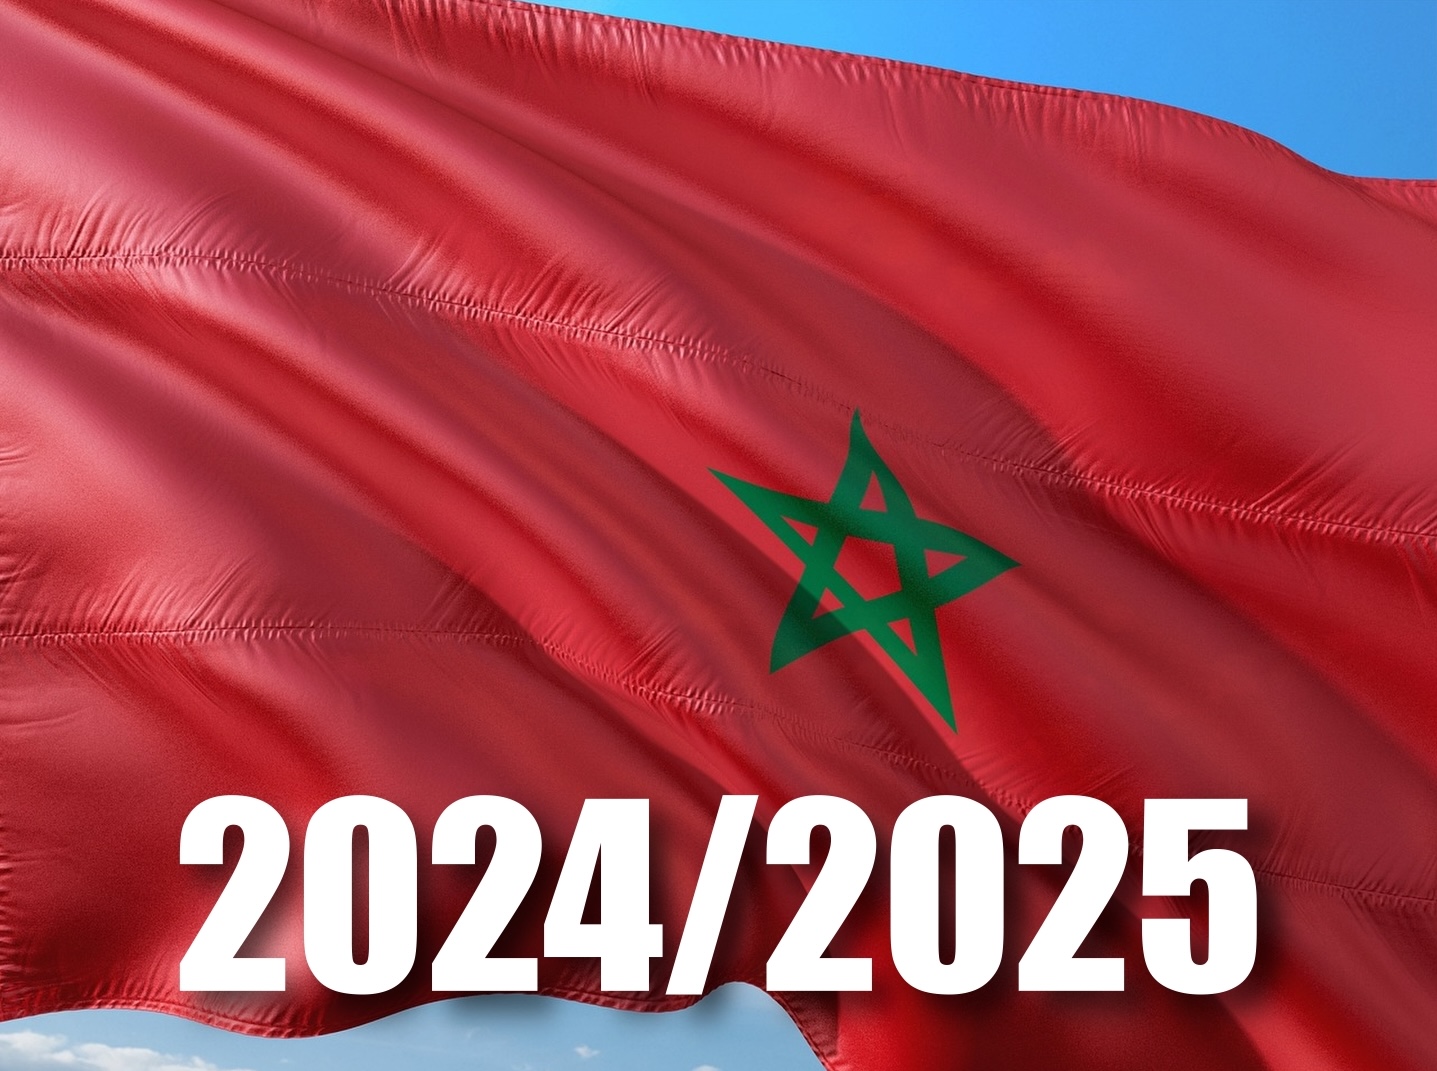 Marokko 2024/2025